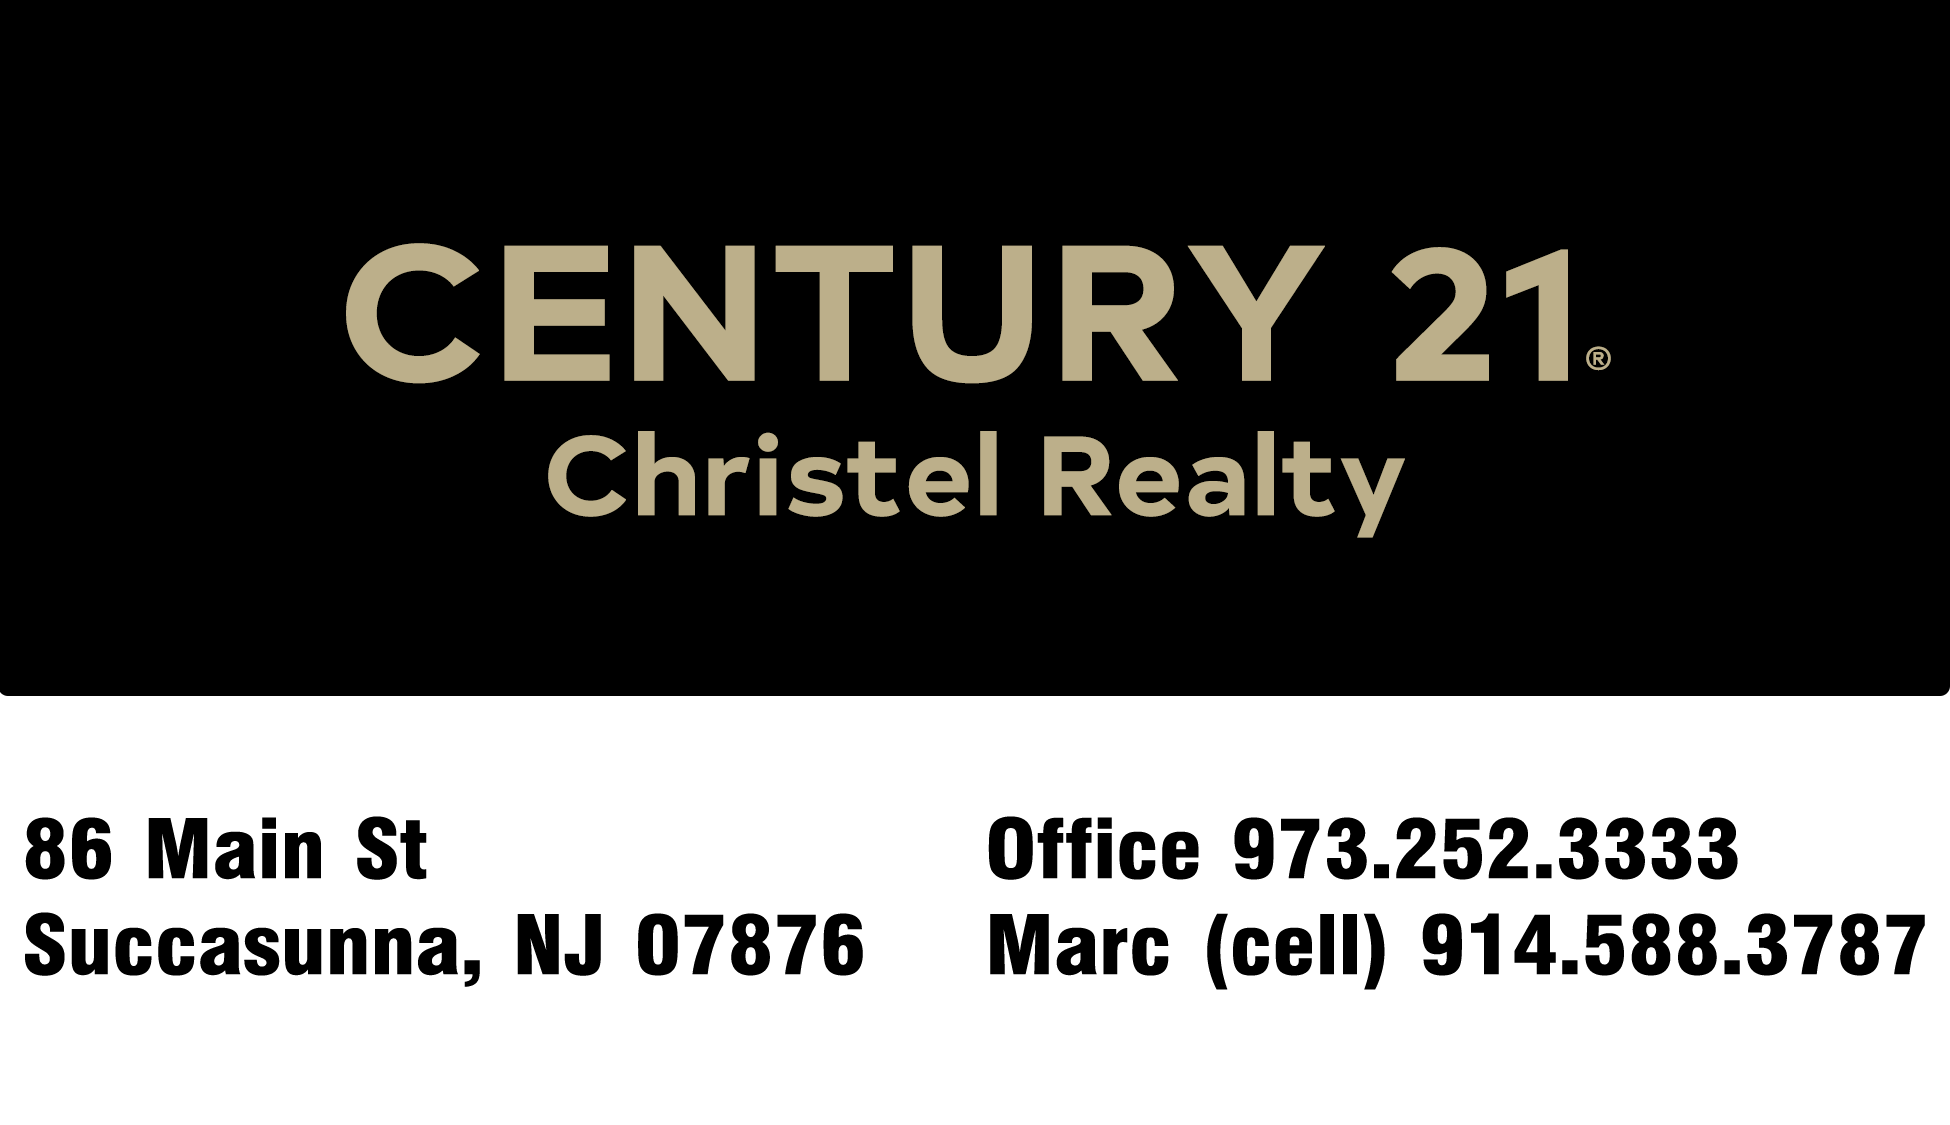 Century 21 Professional Realty, 86 Main St, Succasunna, NJ 07876. Call Marc at 914-588-3787. 